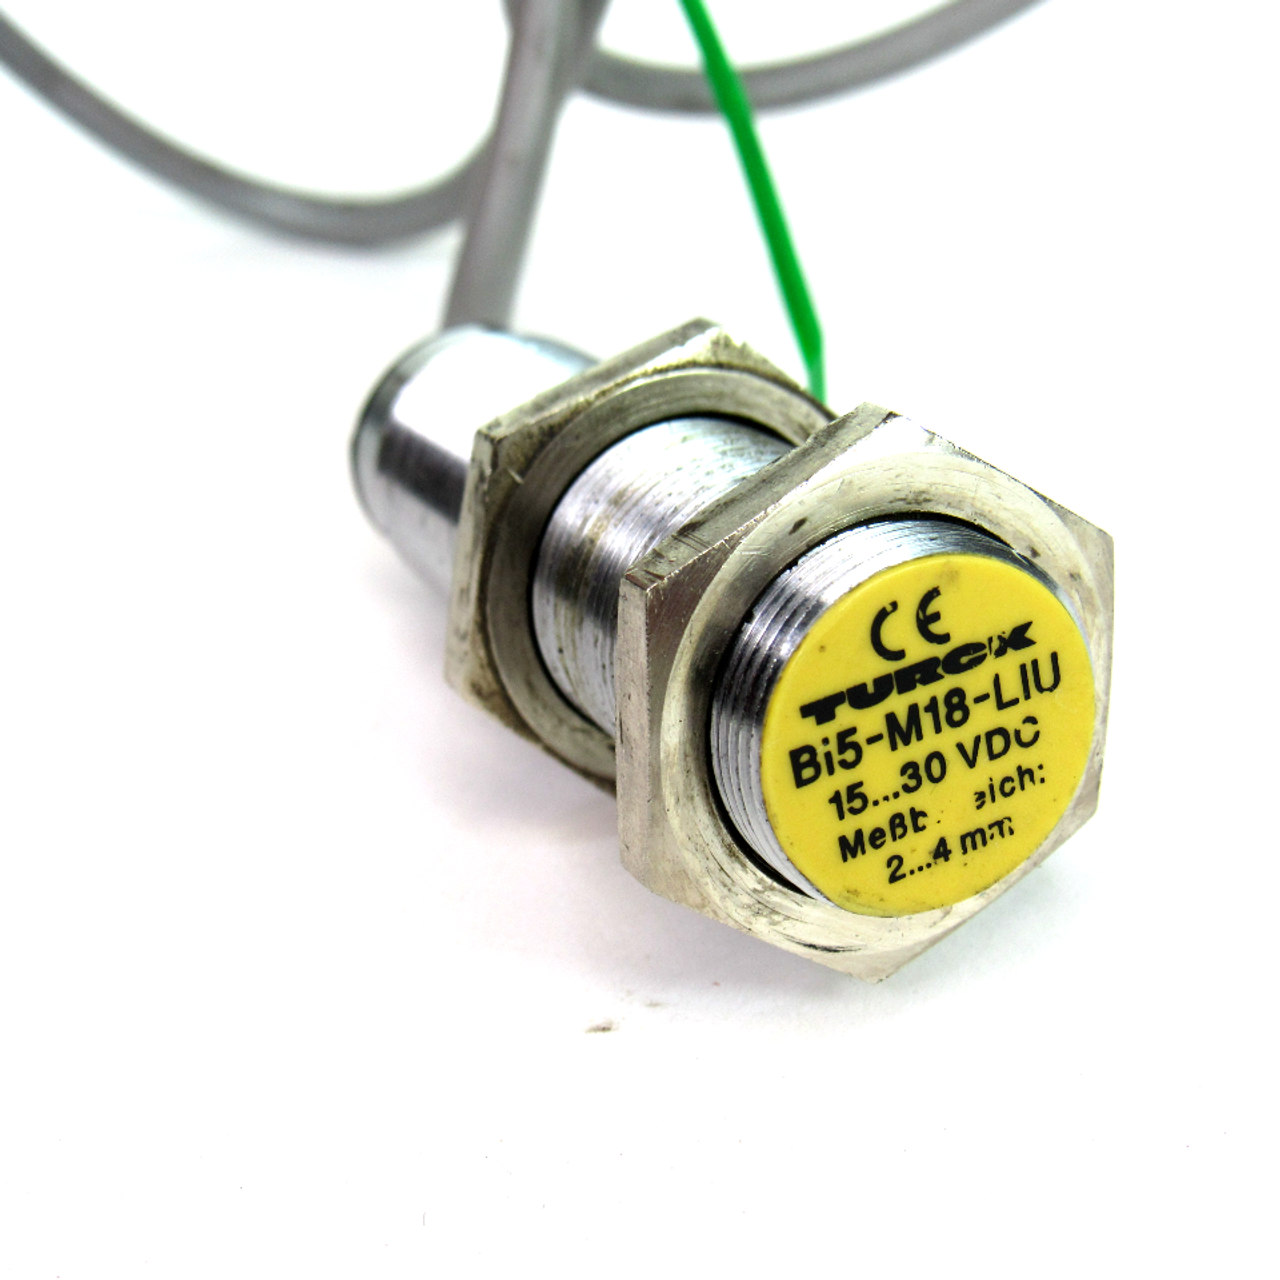 Turck Bi5-M18-LIU Inductive Proximity Sensor, Embeddable, Partial Threading, 15~30V DC, 5mm Range